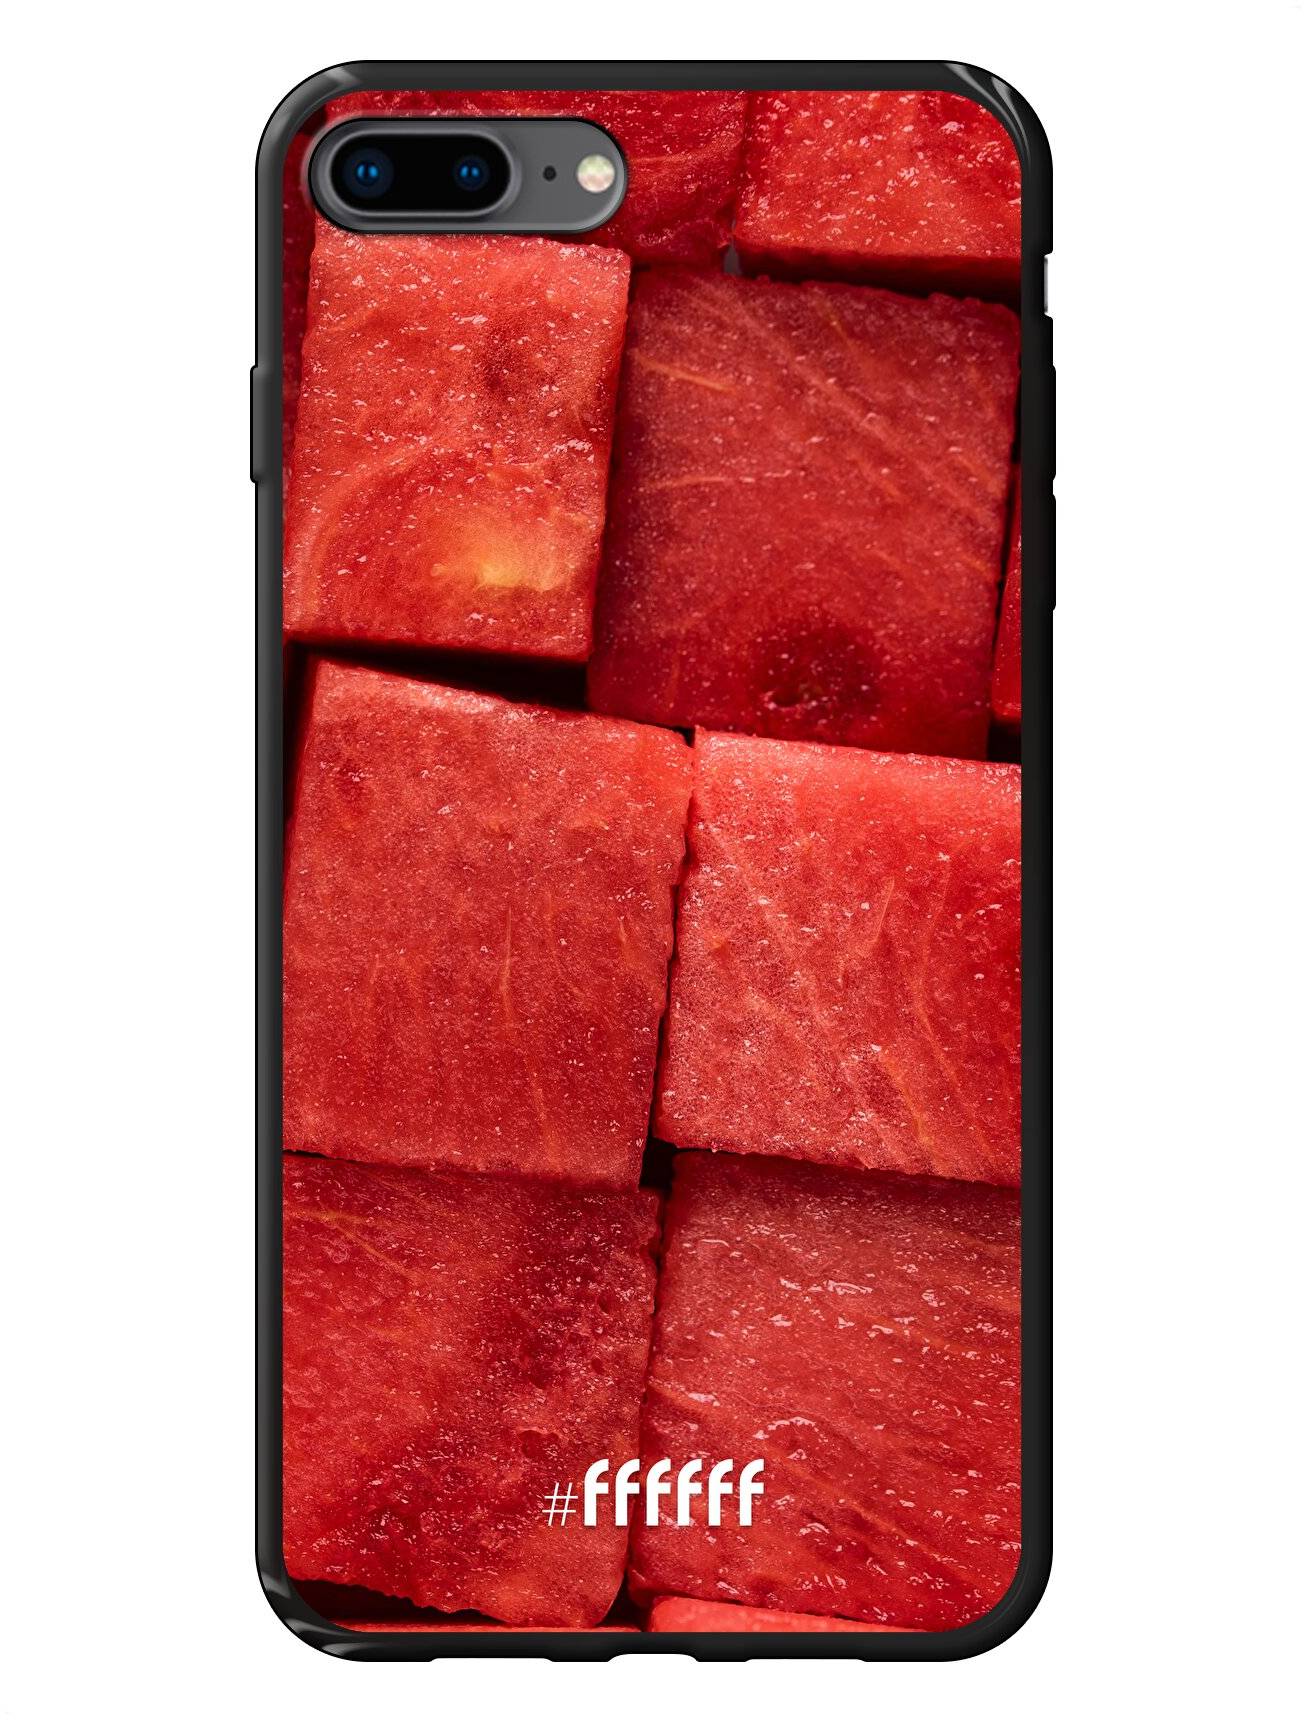 Sweet Melon iPhone 8 Plus